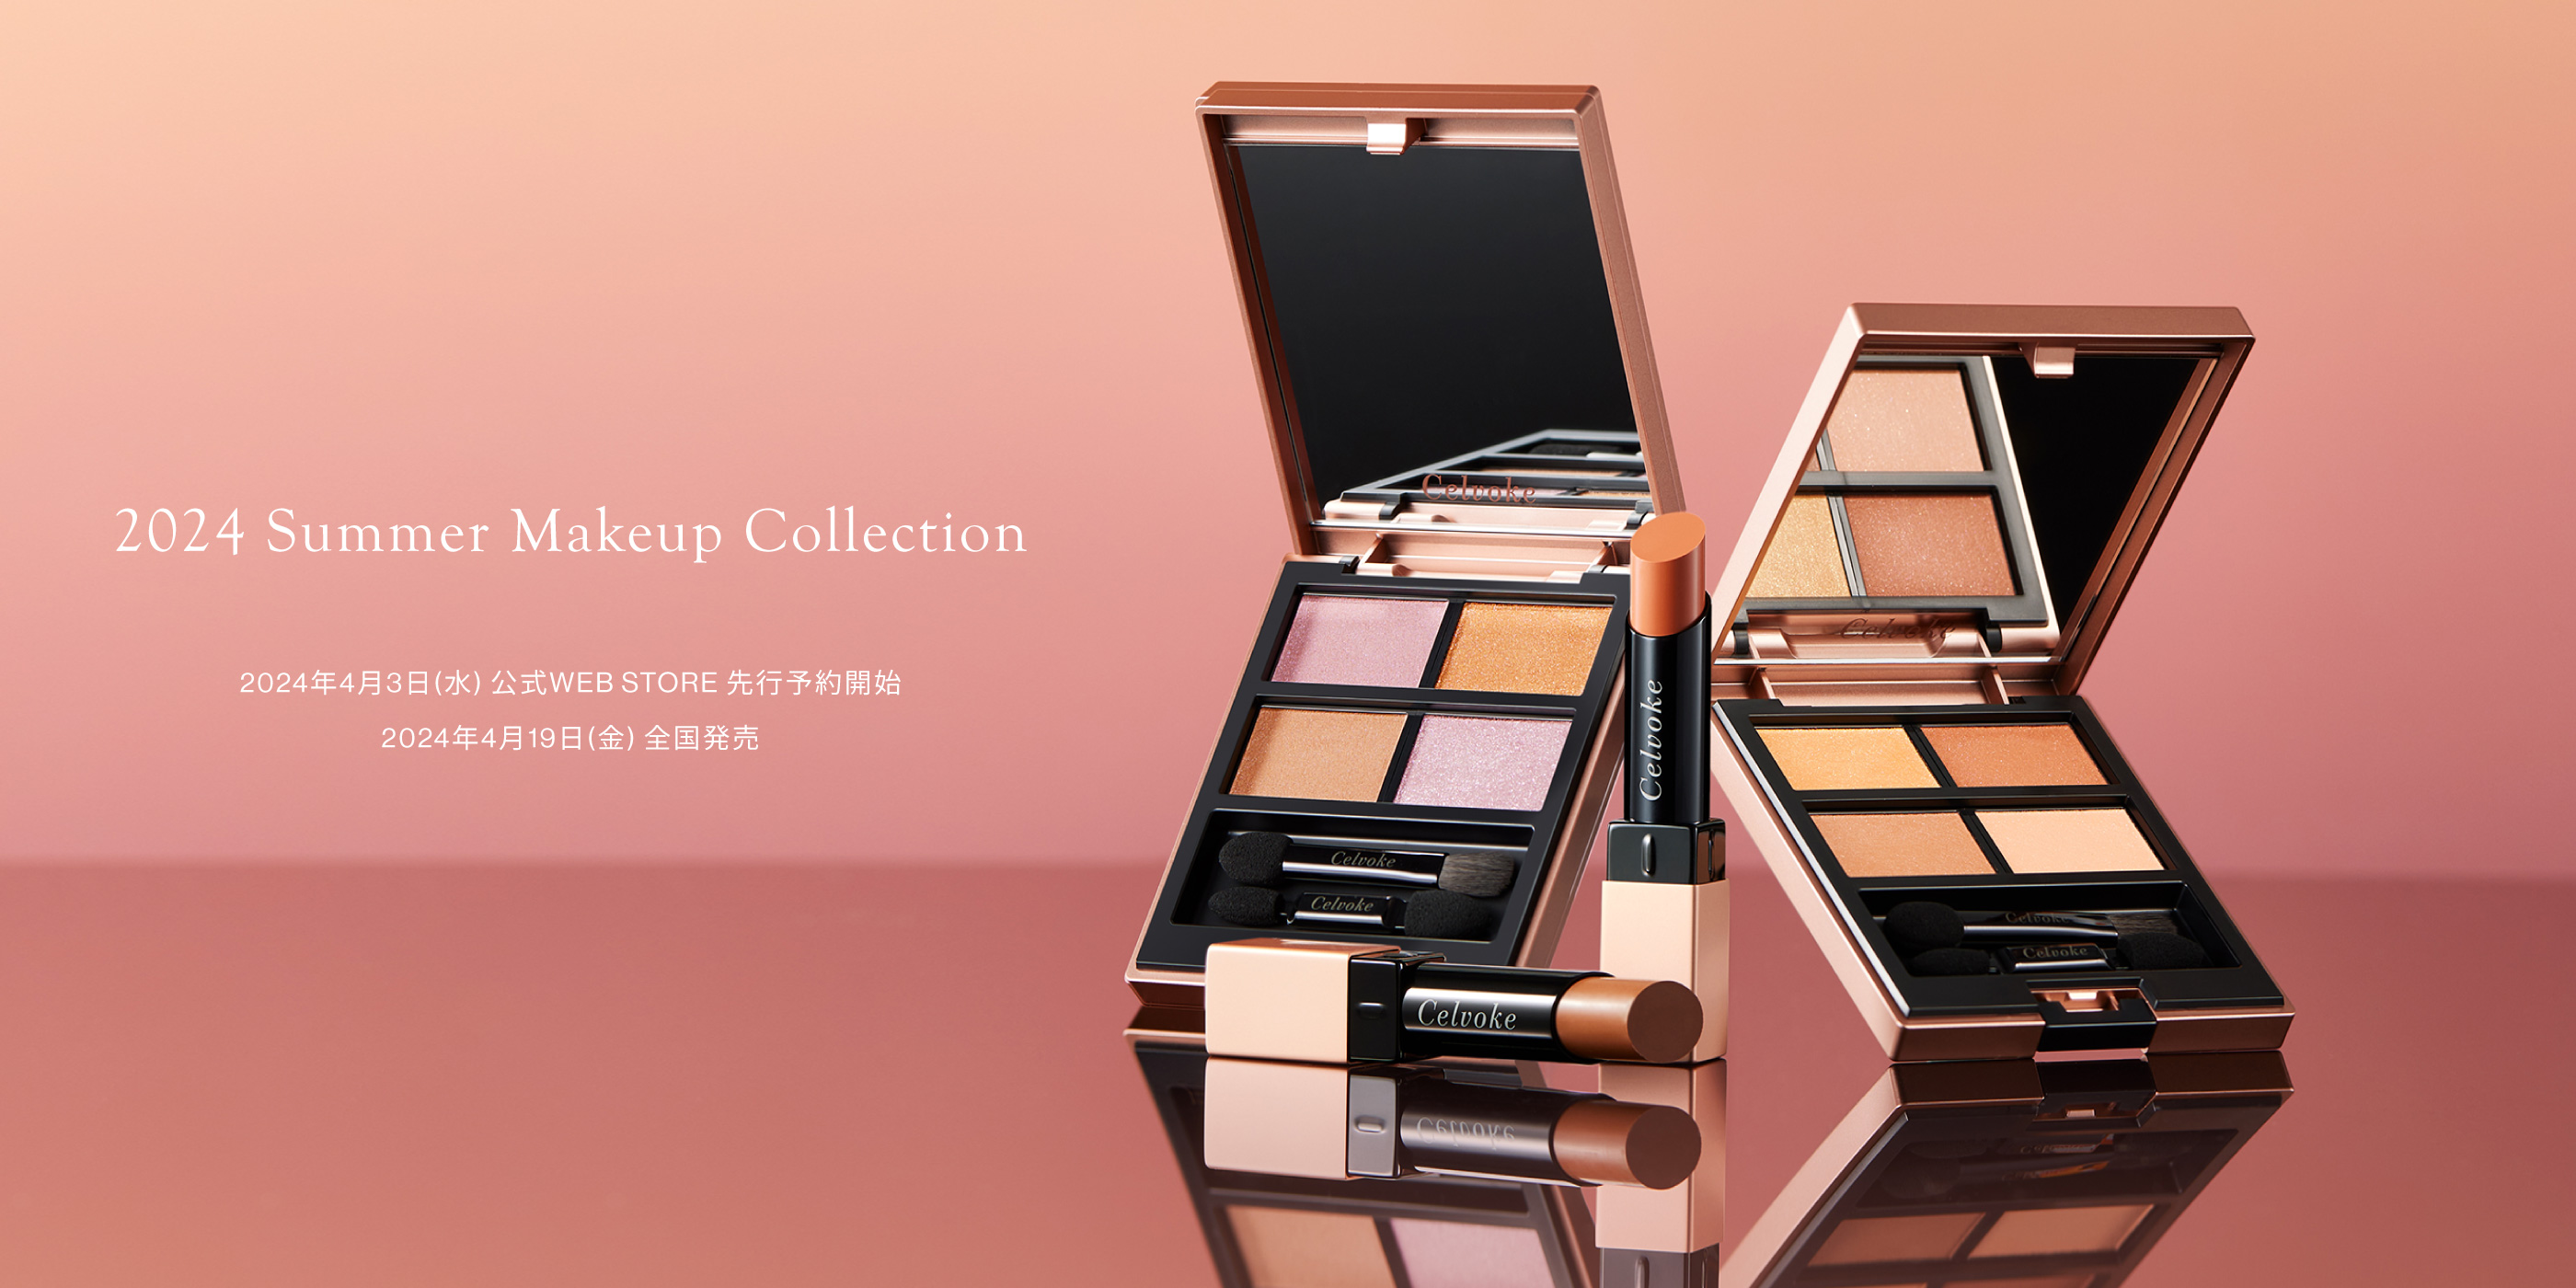 2024 Summer Makeup Collection 2024年4月3日(水) 公式WEB STORE 先行予約開始 2024年4月19日(金) 全国発売